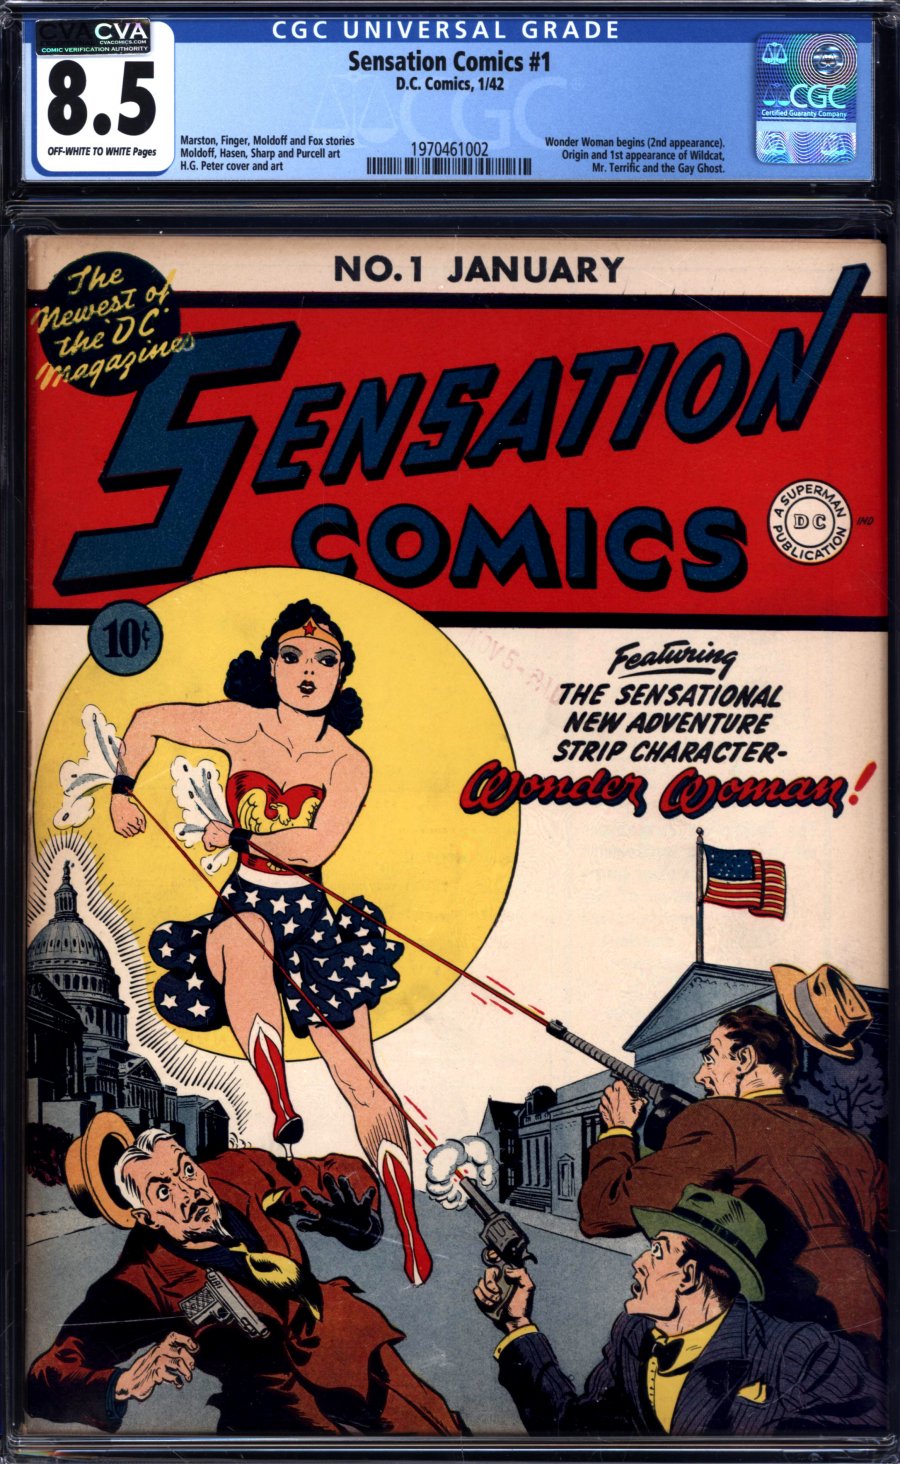 Sensation comics #1